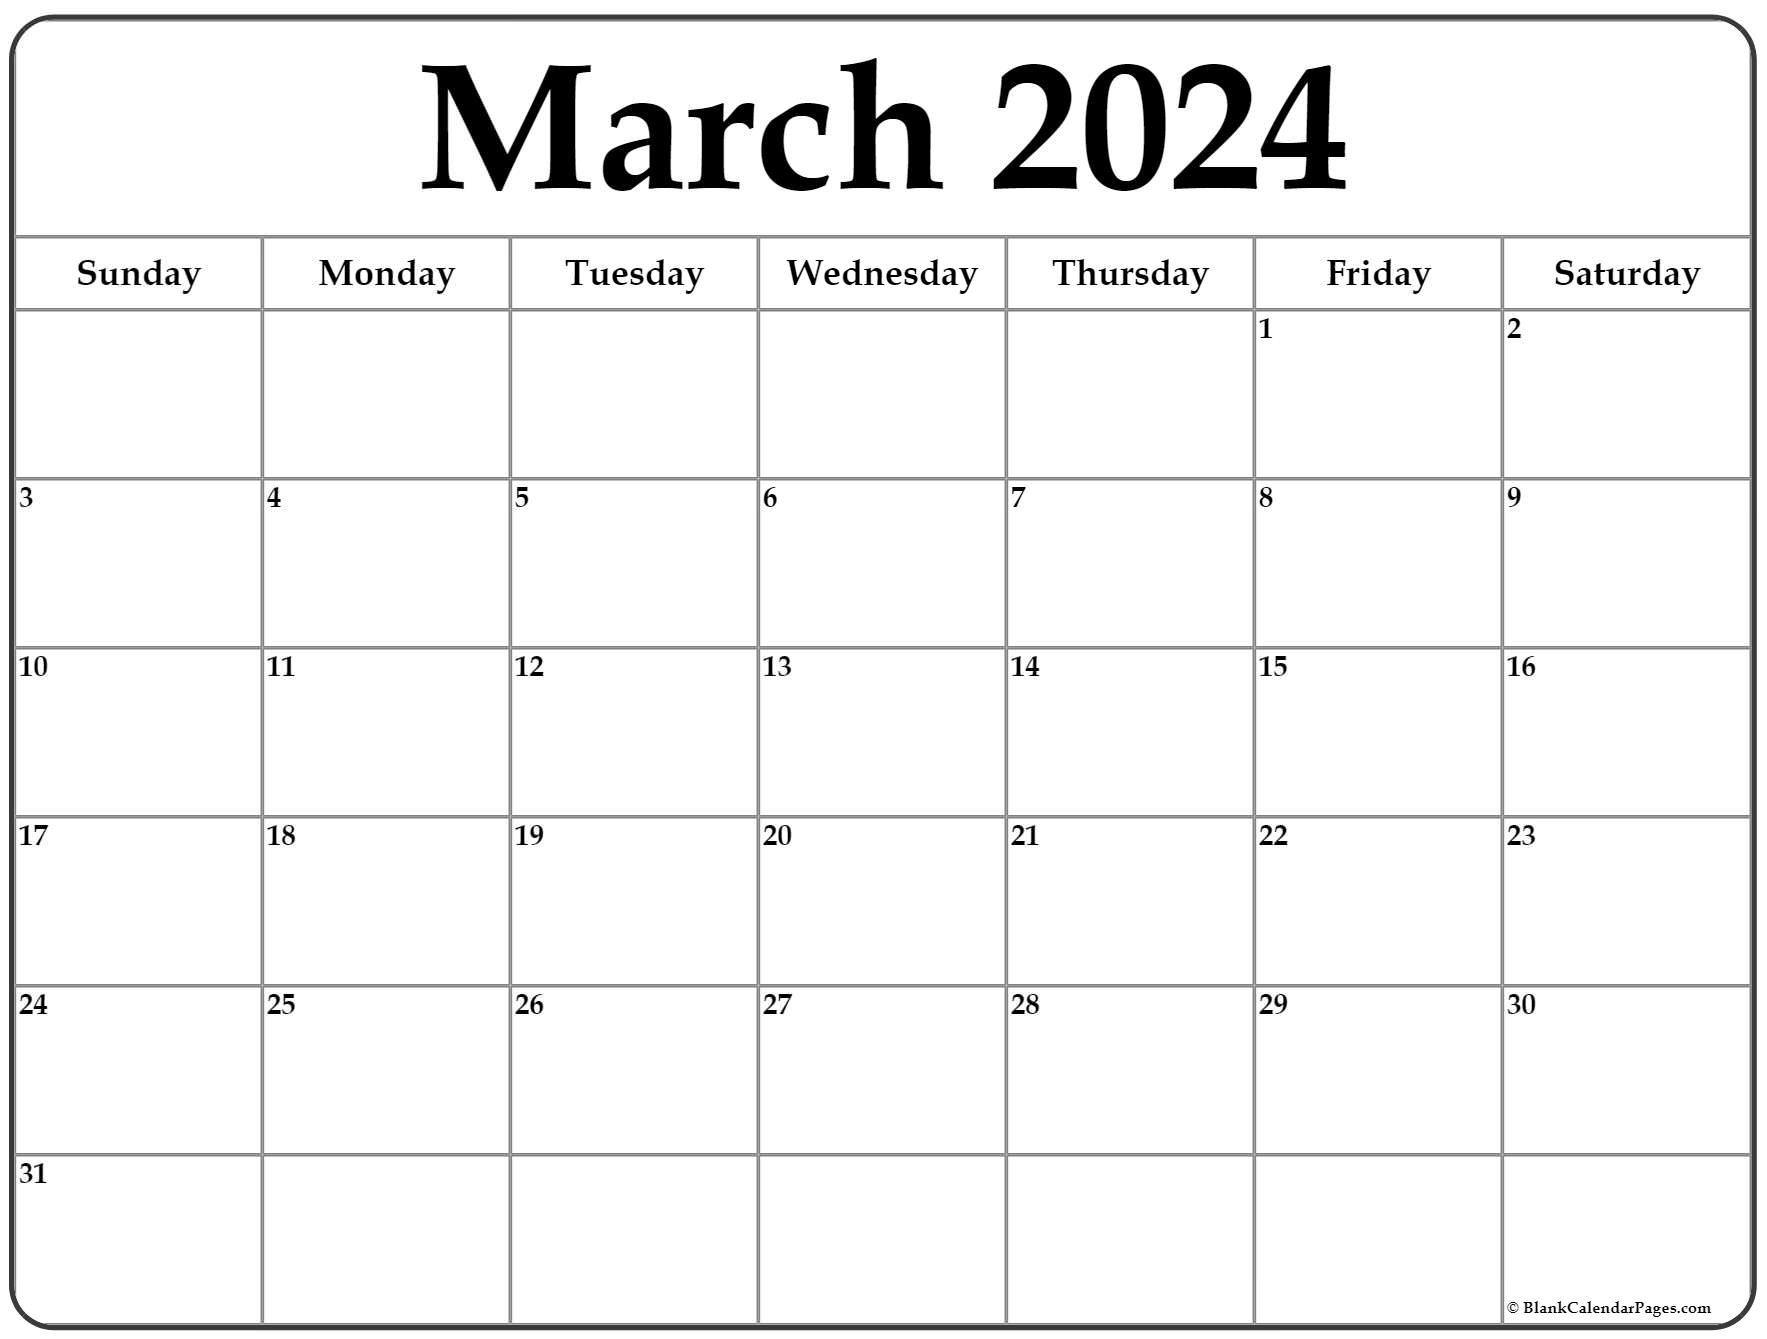 March 2024 Calendar | Free Printable Calendar in Free Printable Calendar 2024 No Downloads March